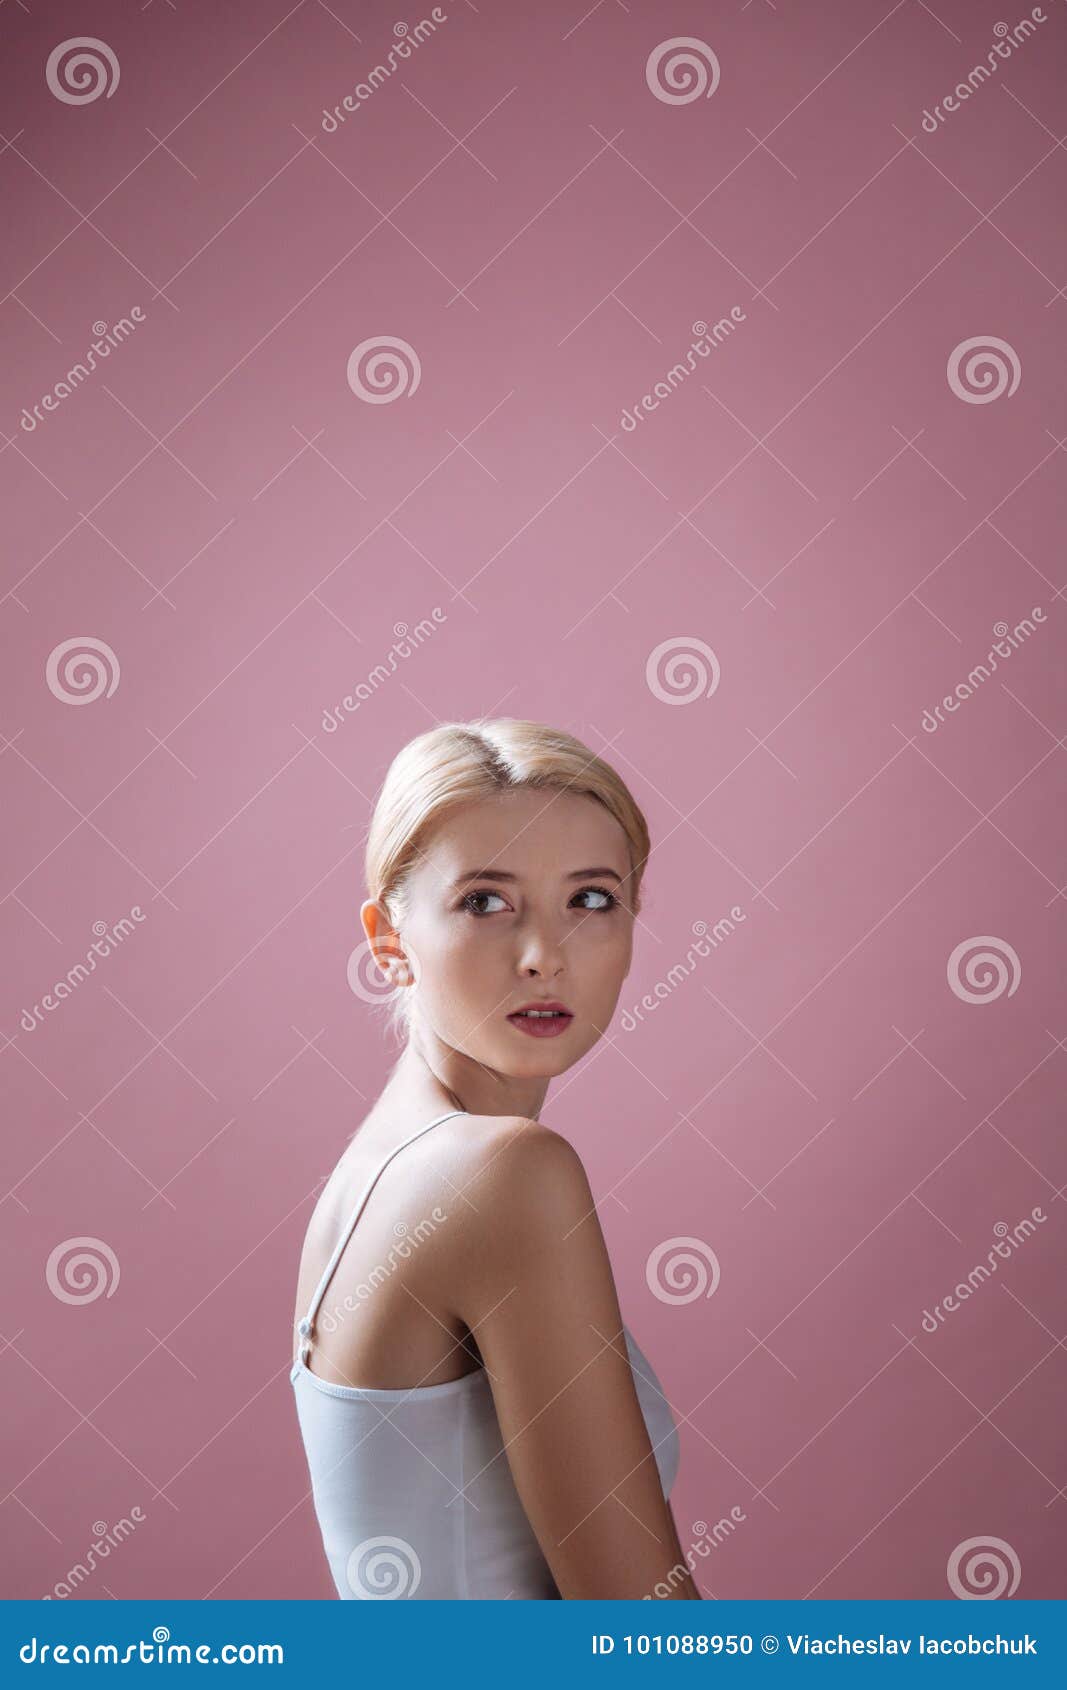 Shy Blonde Female Looking Upwards Stock Photo